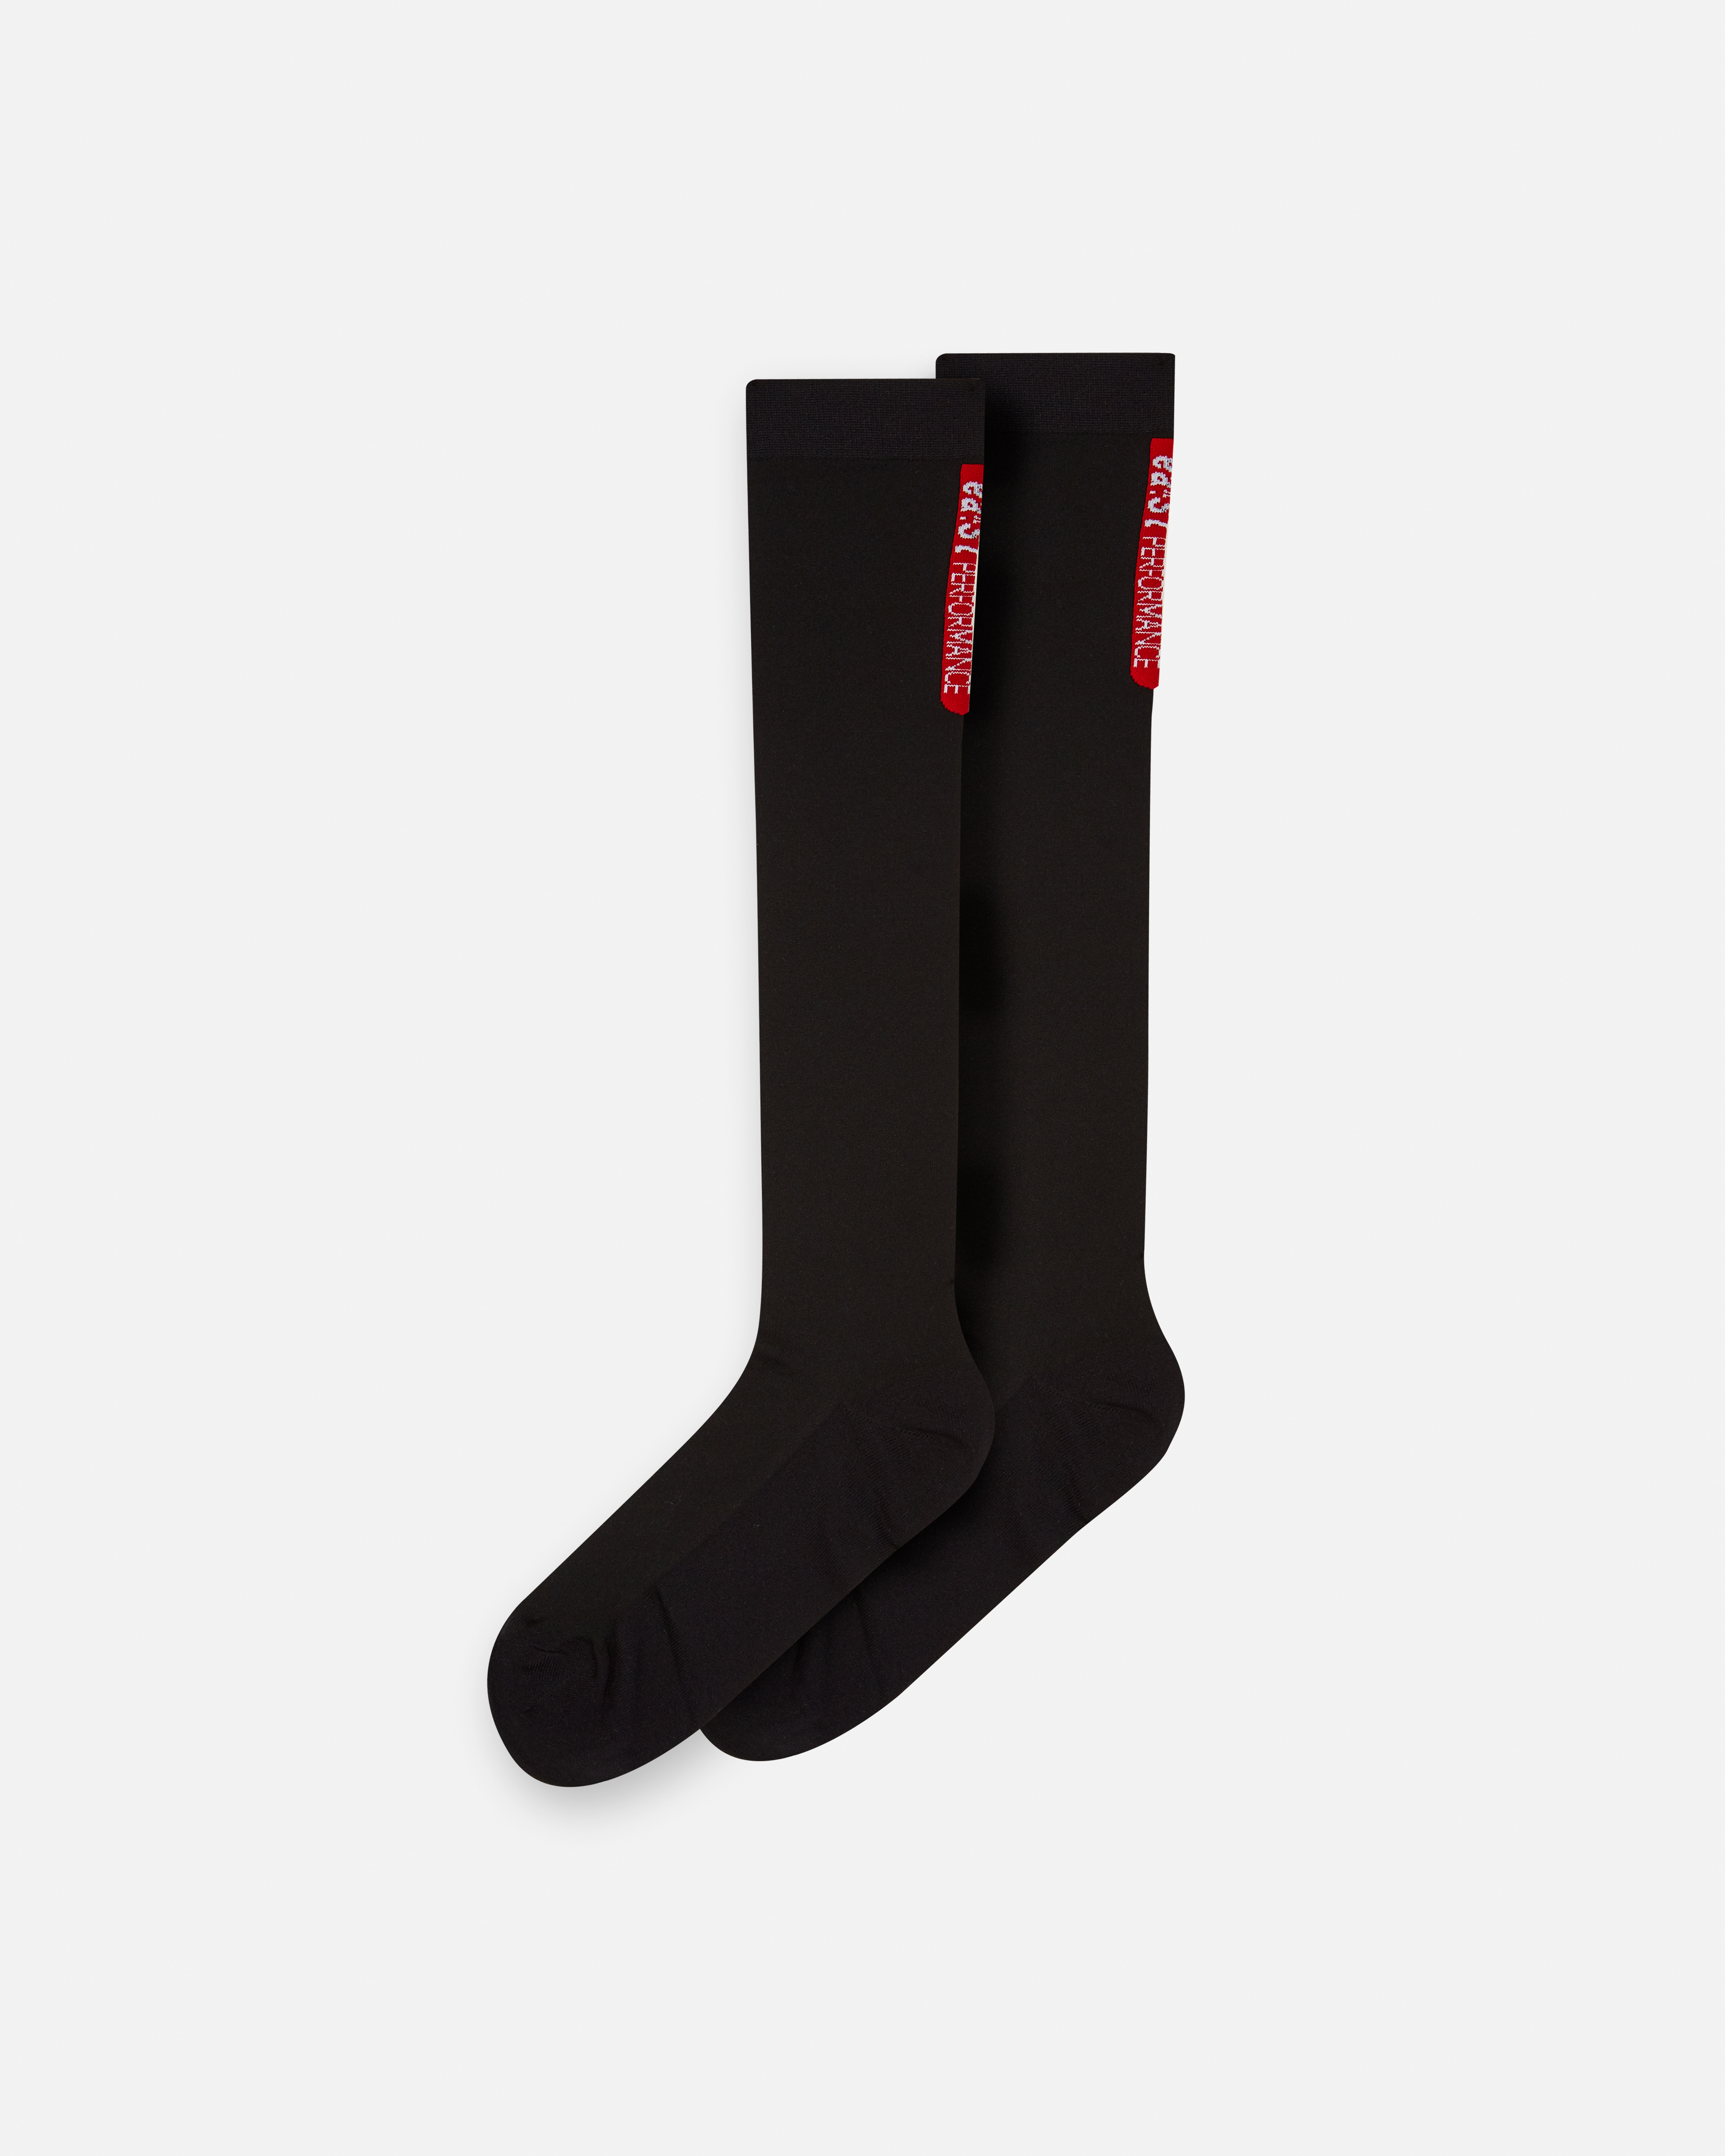 eaSt Riding Socks Performance, black, one size